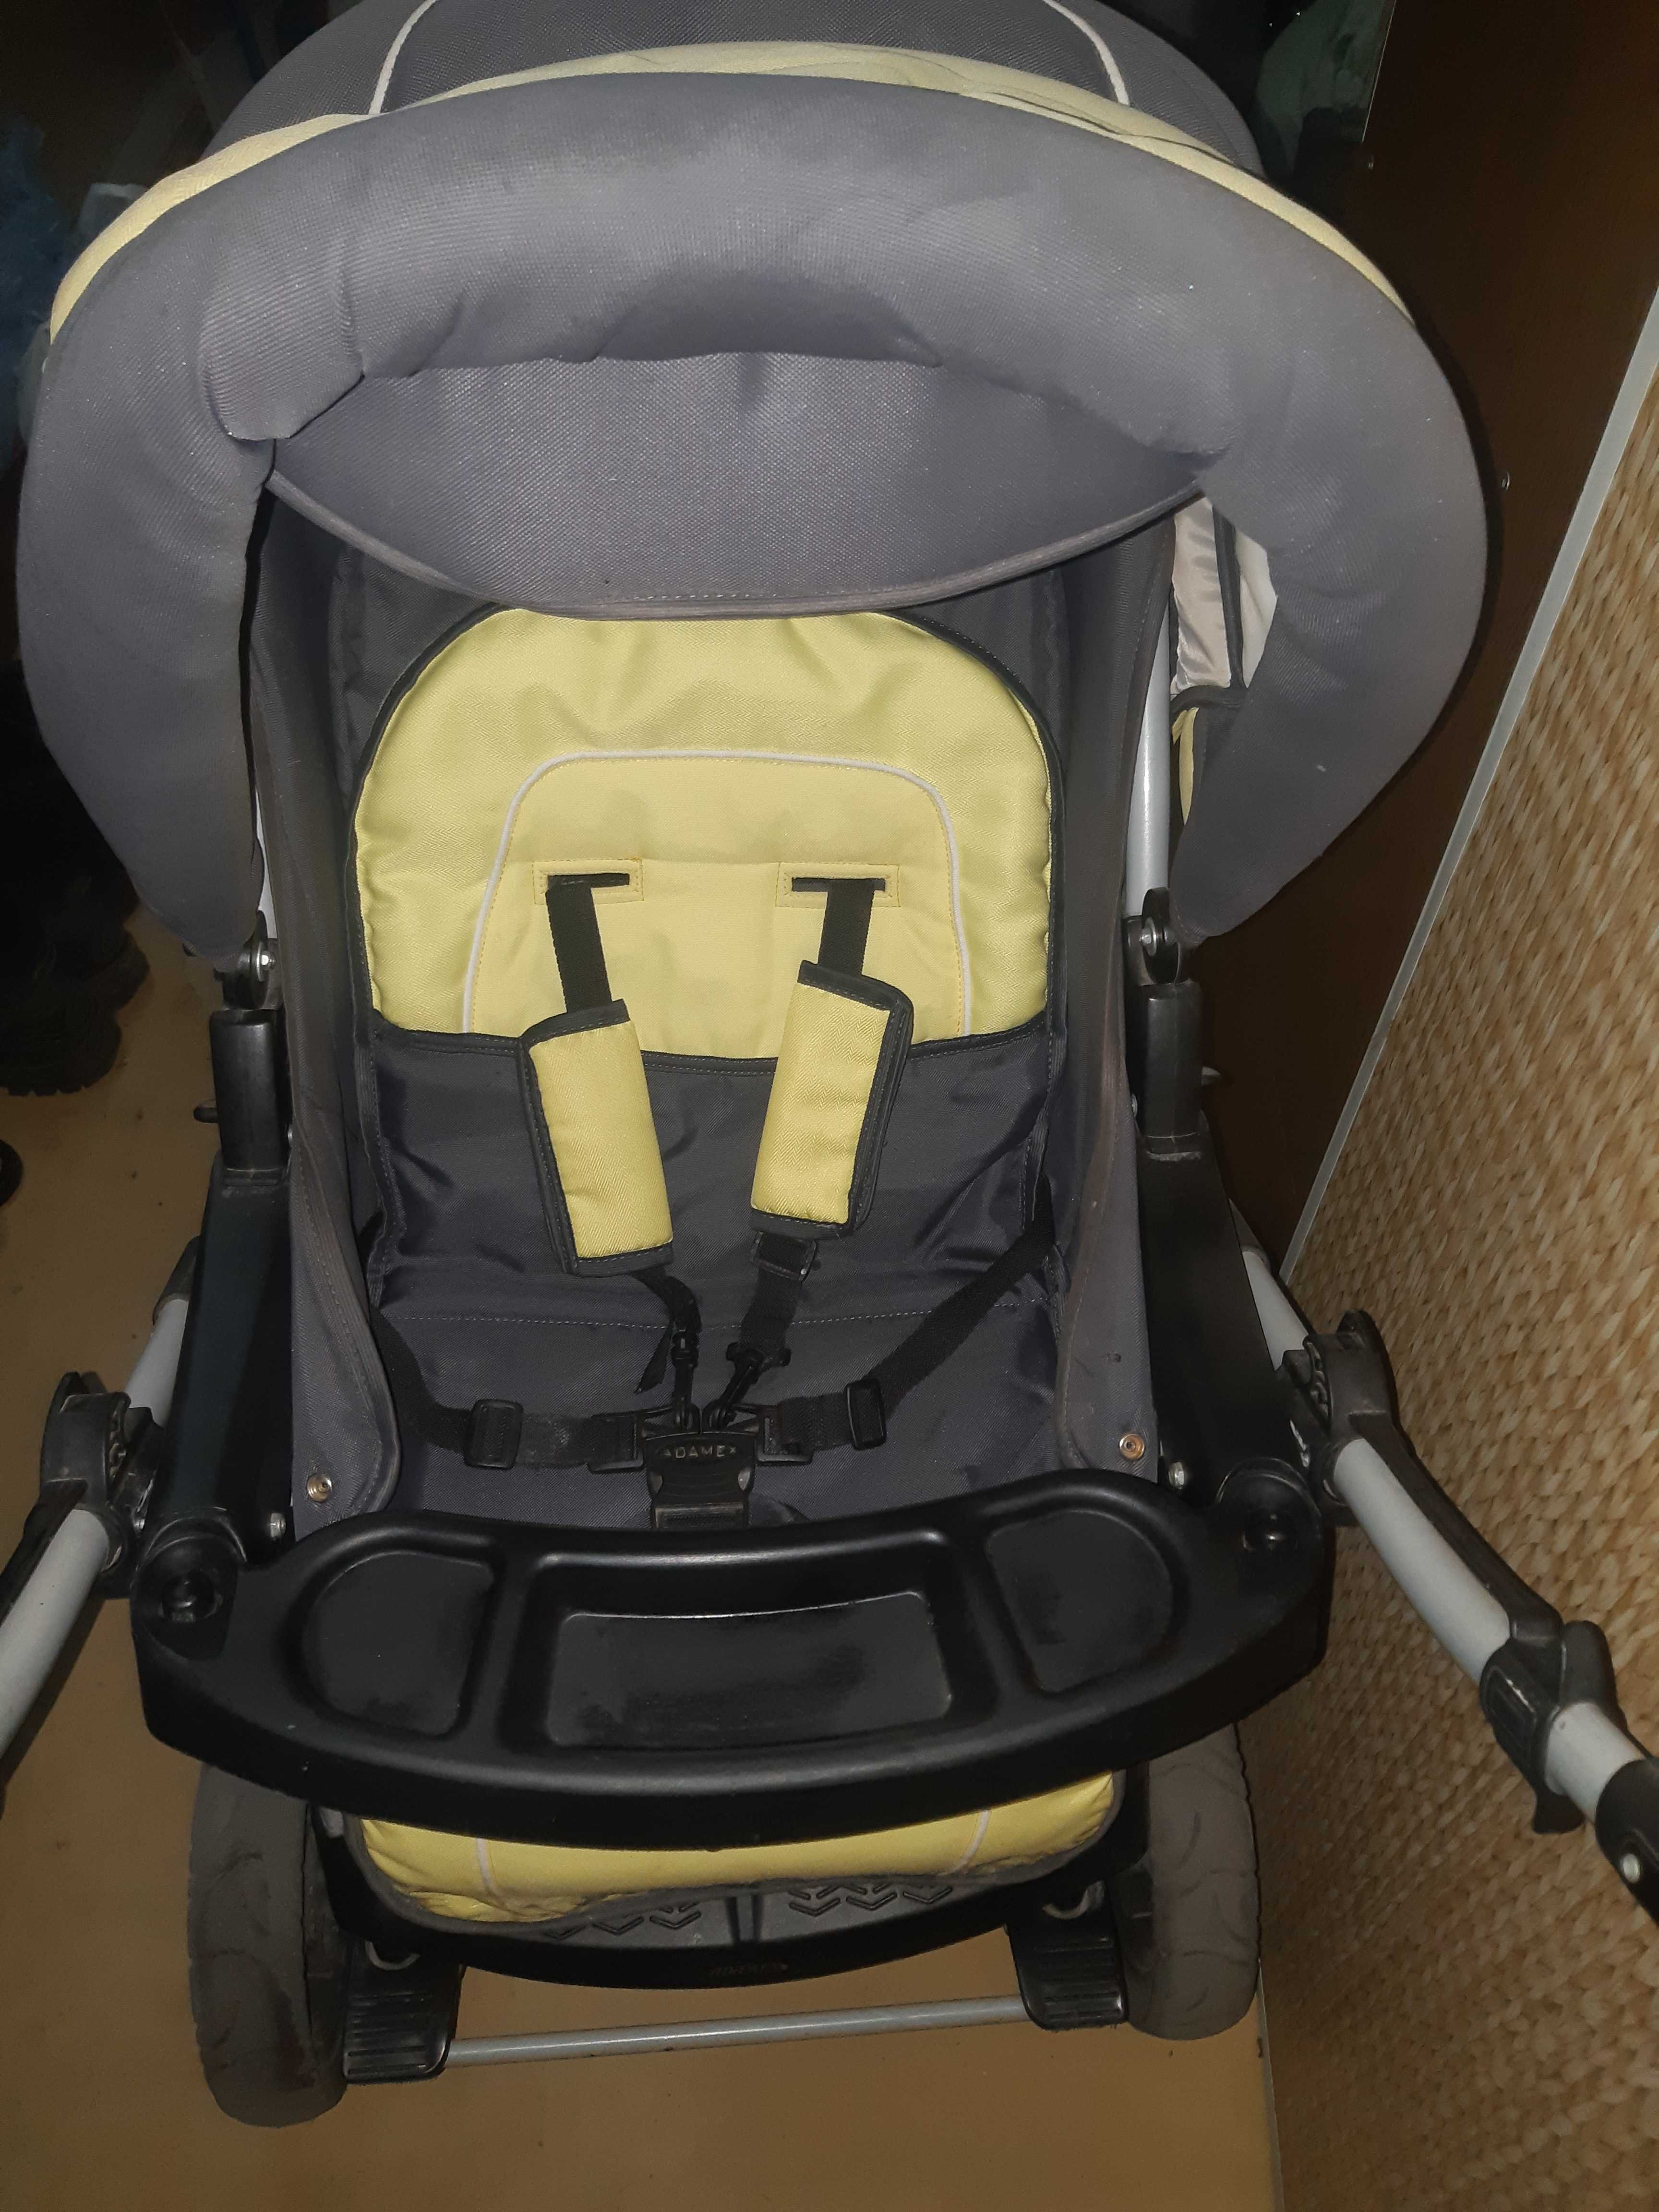 Дитяча коляска | візок | детская коляска Adamex Young 2 в 1 сіро-жовта